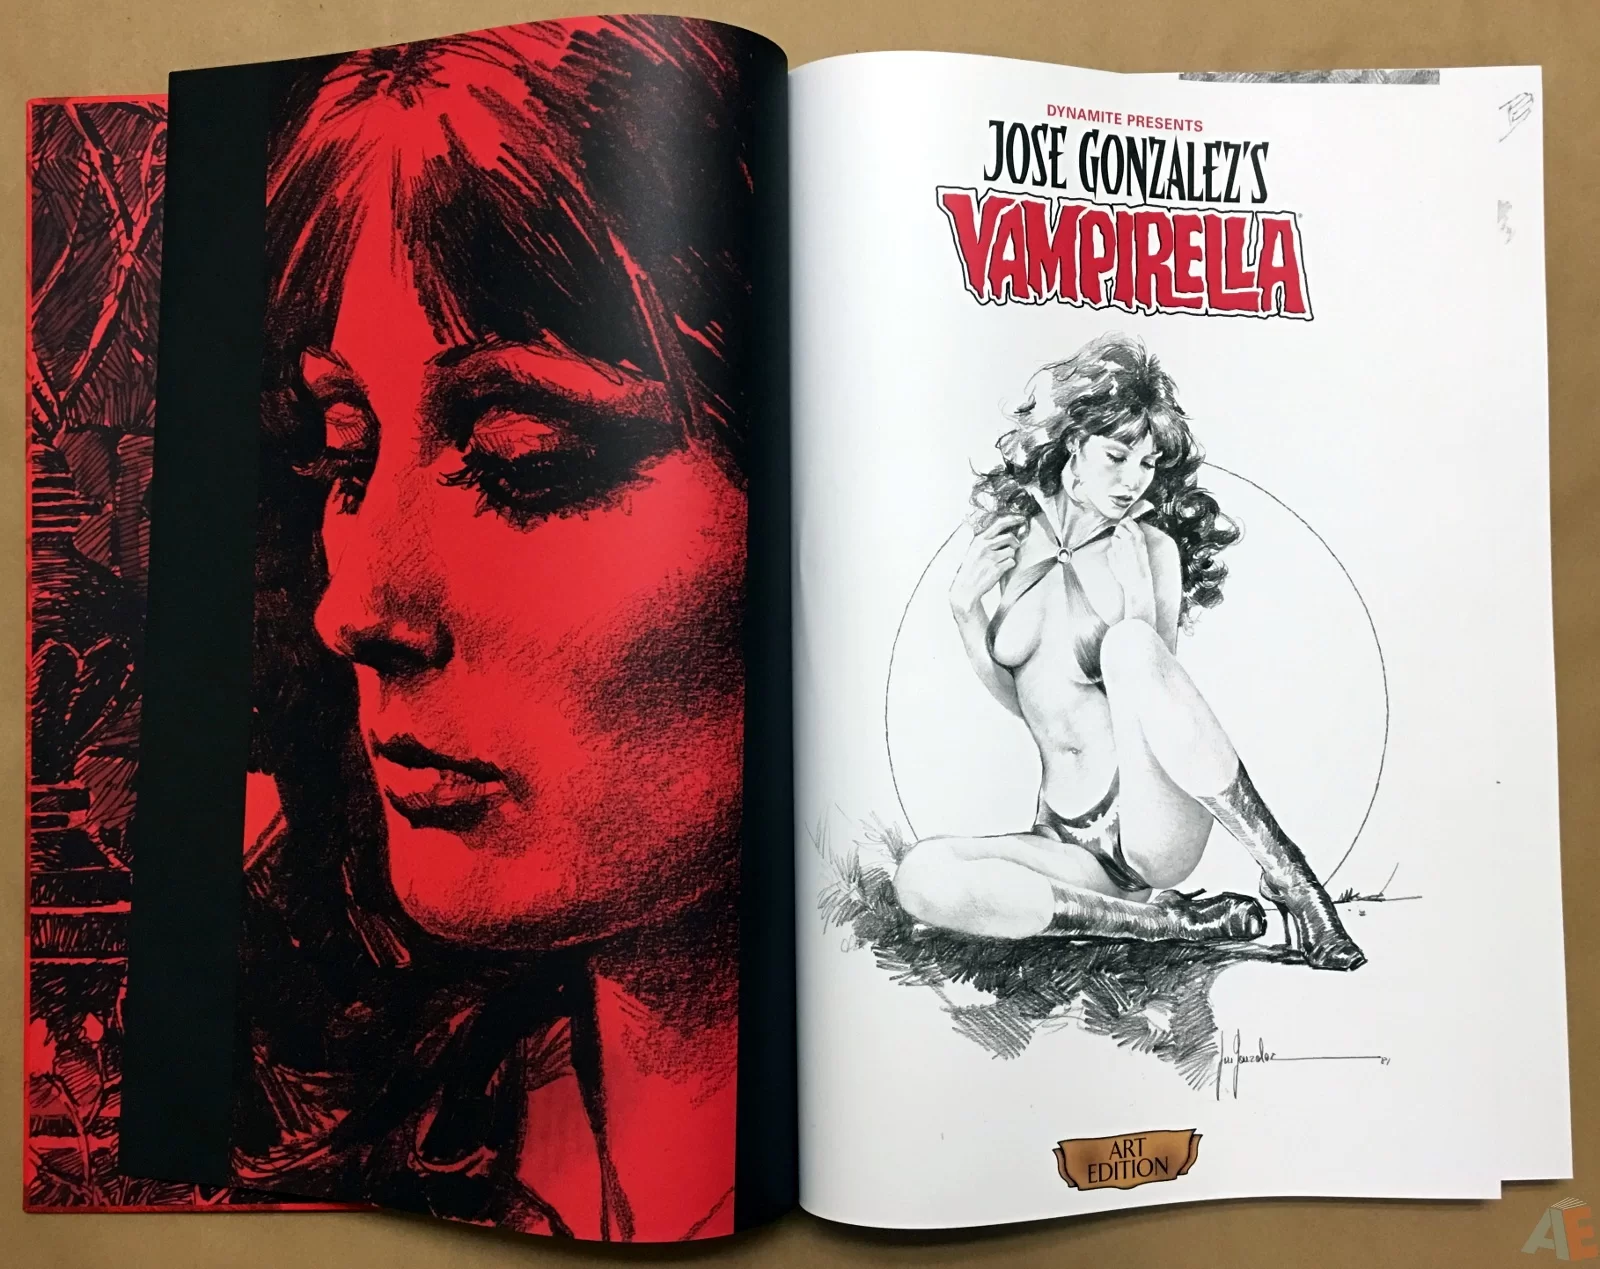 Jose Gonzalez’s Vampirella Art Edition Vol 1